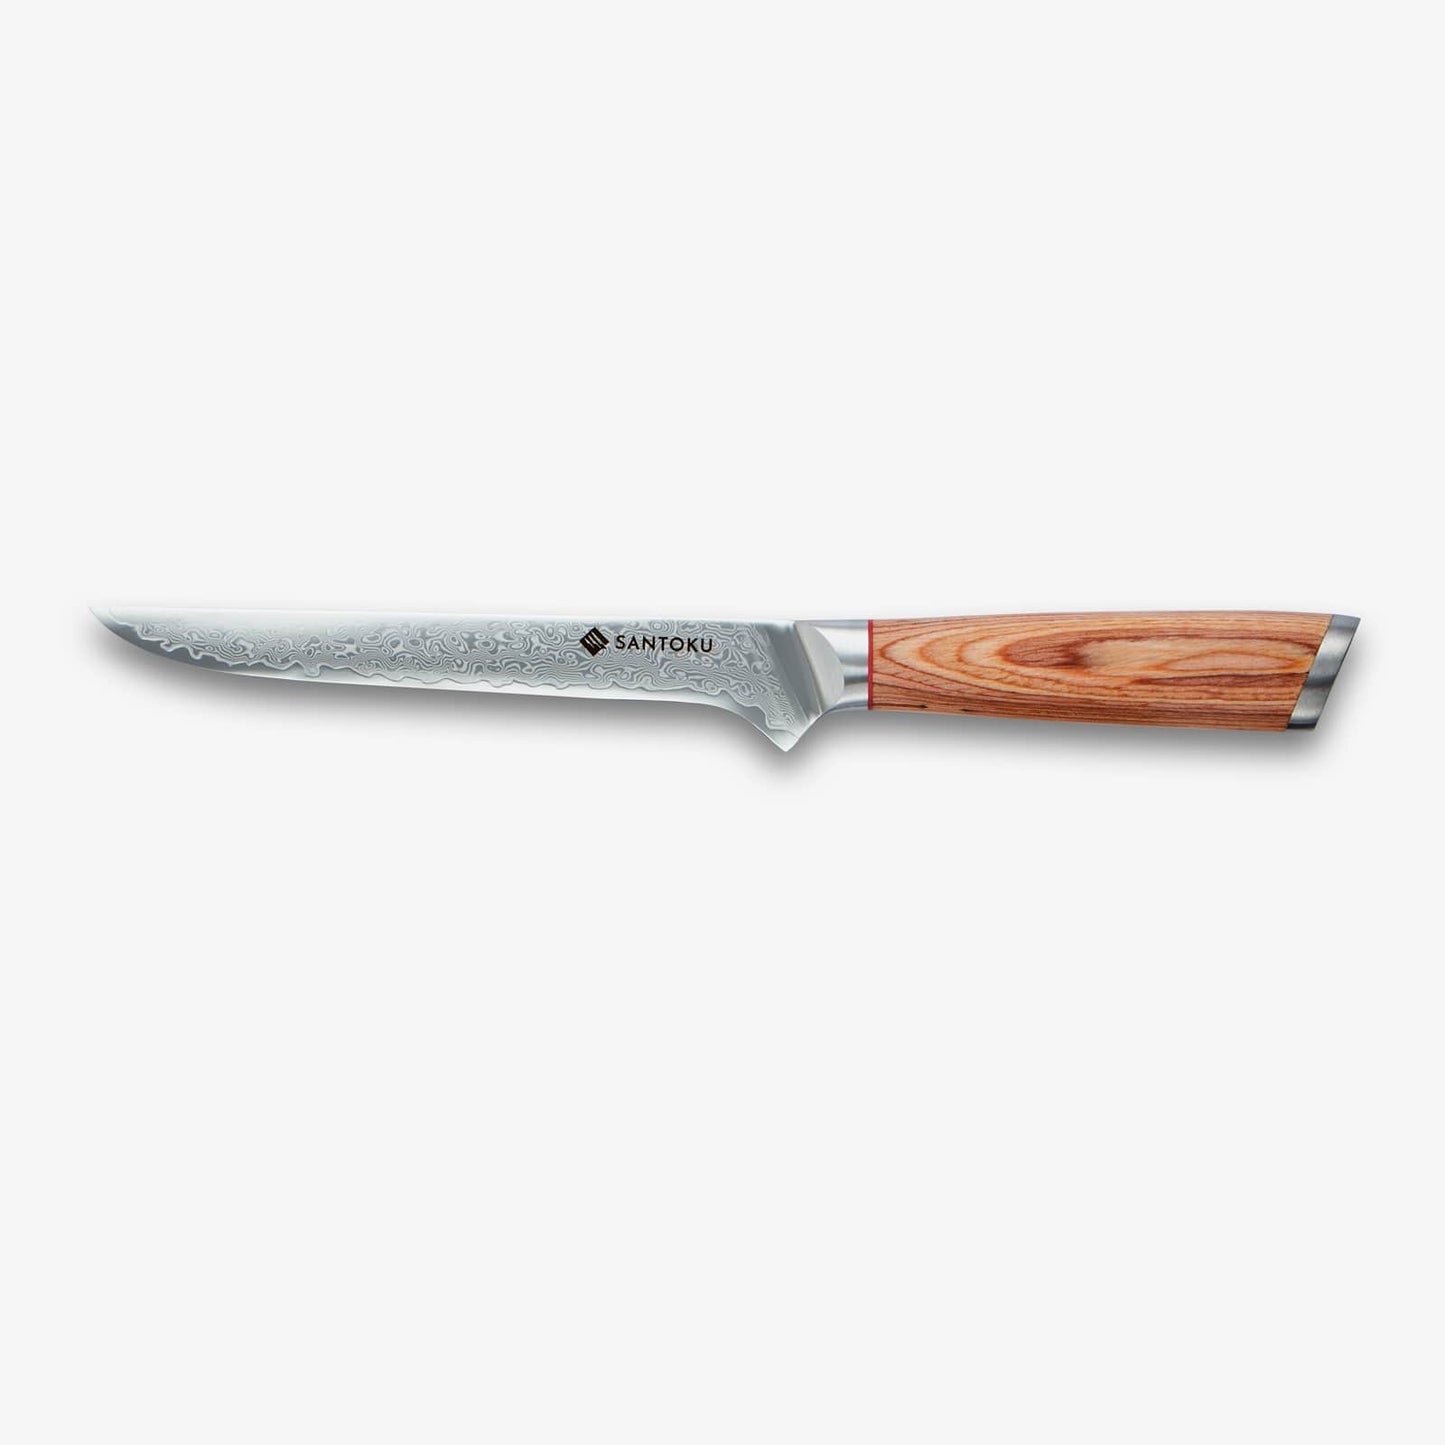 Haruta (はる た) 6 tommers utbeningskniv